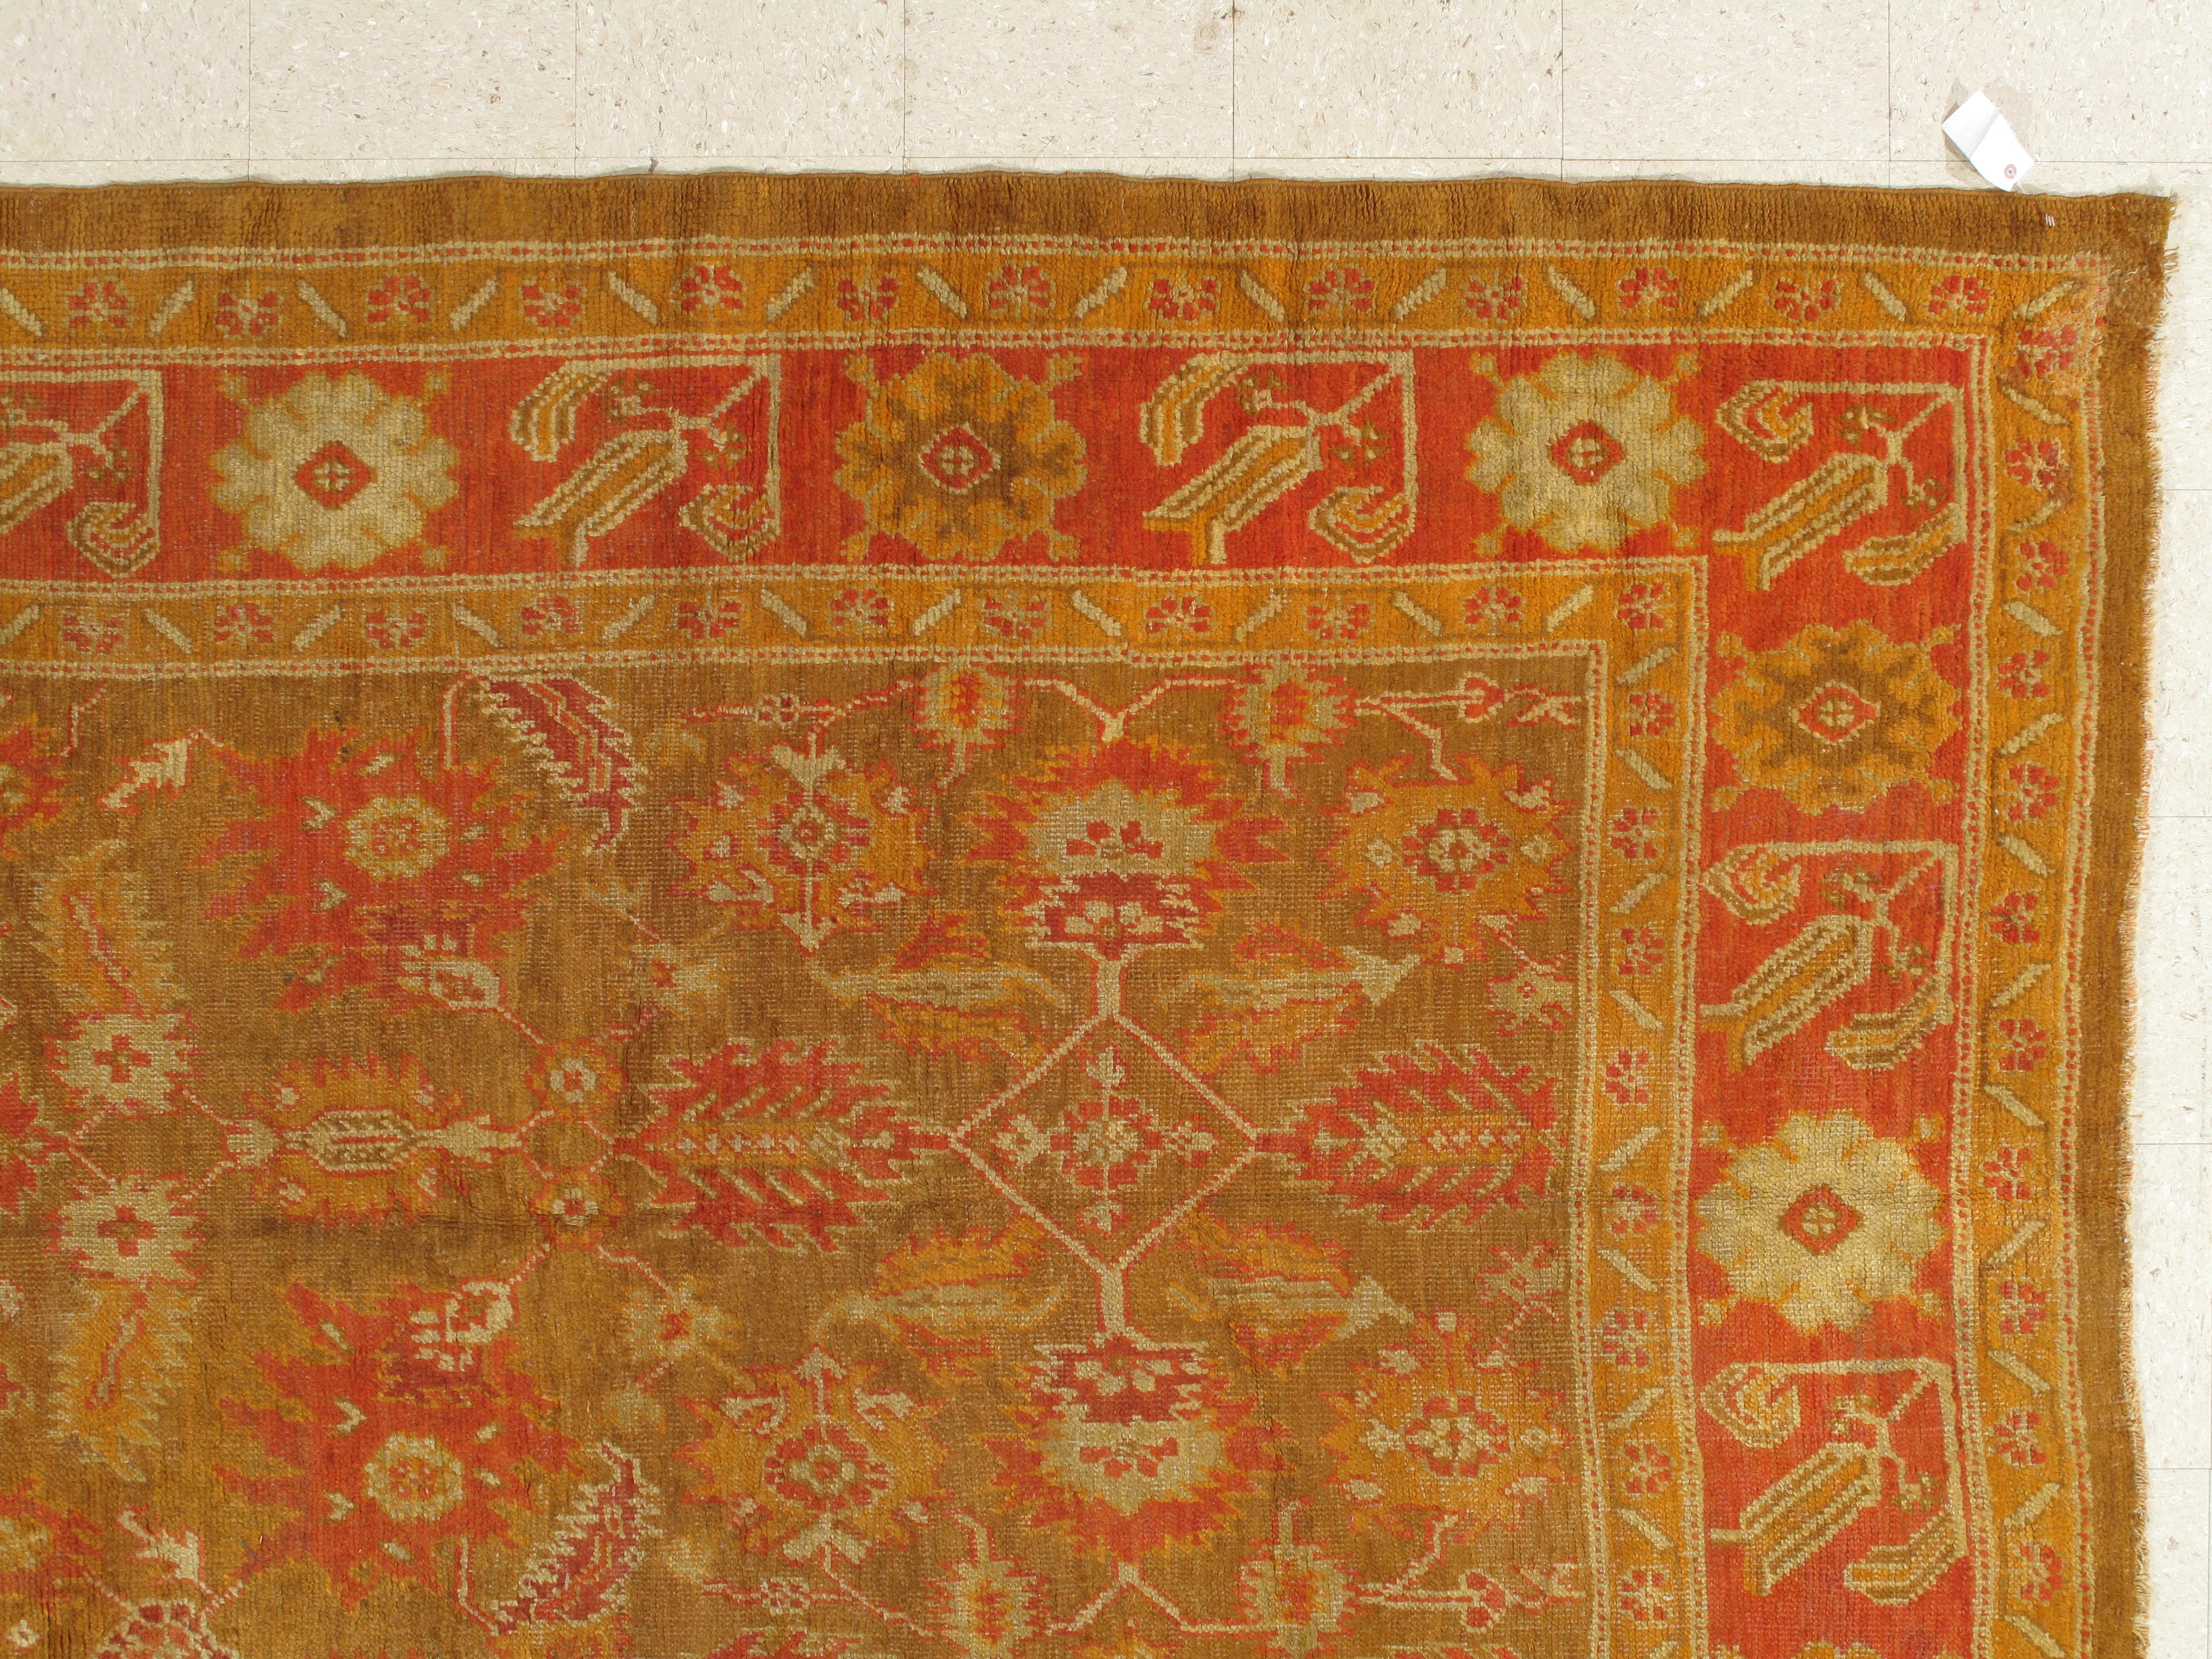 Antique Oushak Carpet, Oriental Rug, Handmade Green, Saffron, Ivory and Coral For Sale 3